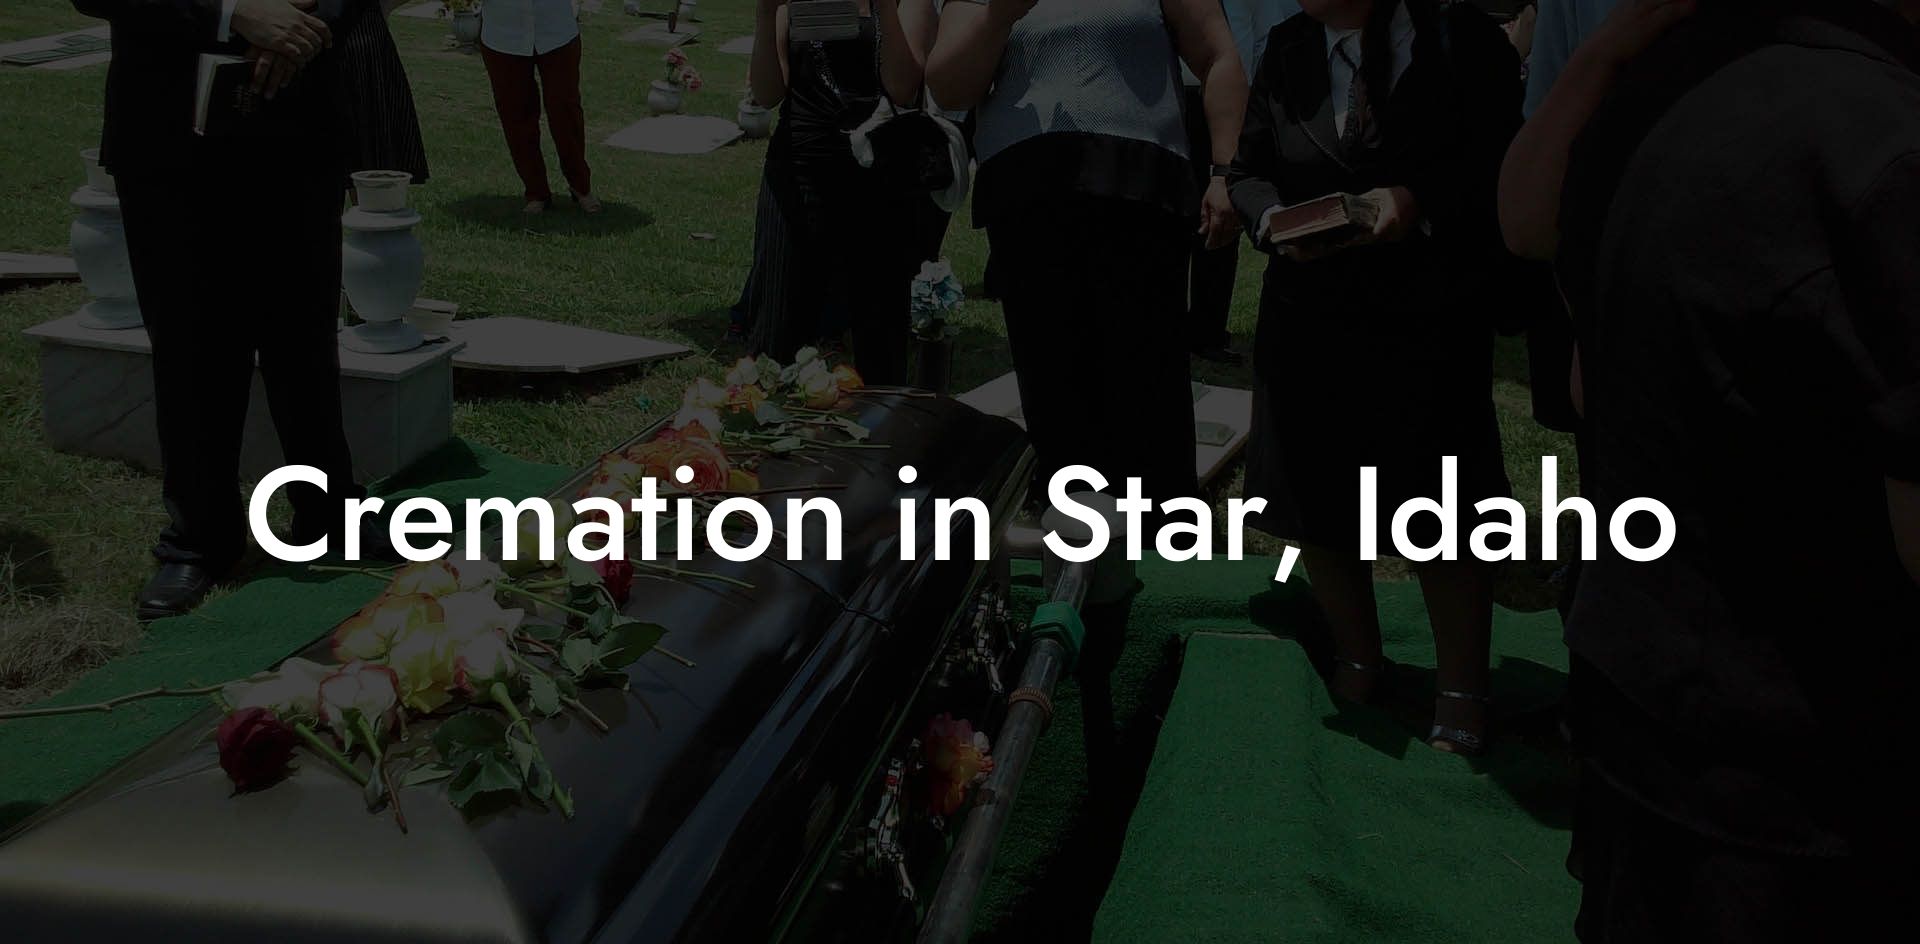 Cremation in Star, Idaho